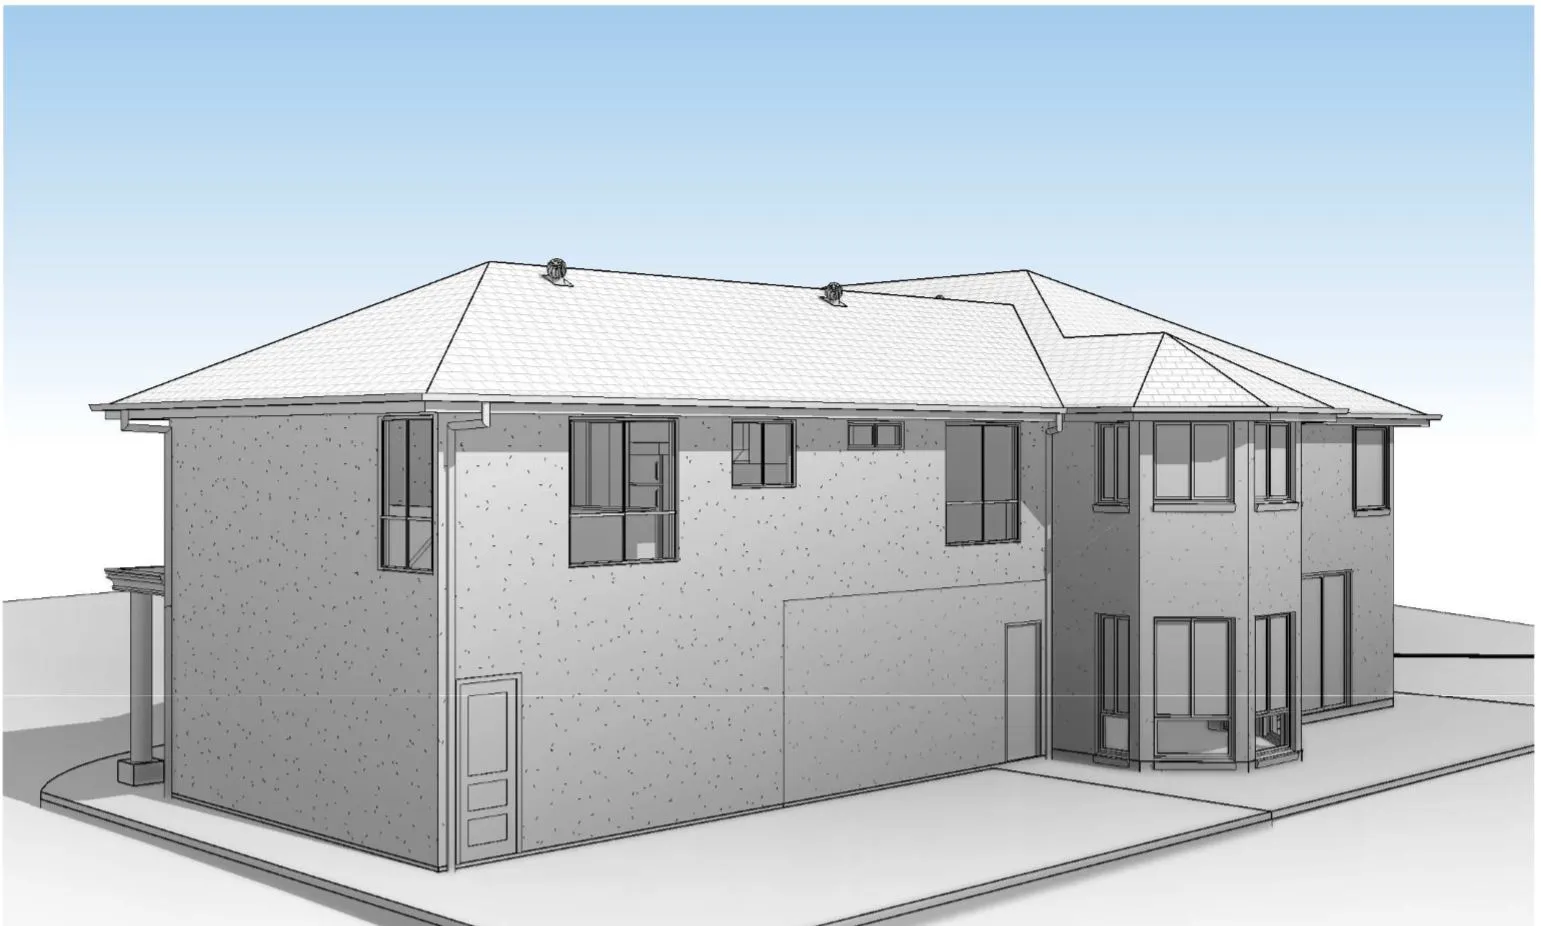 Plans 3D render design federation home side view